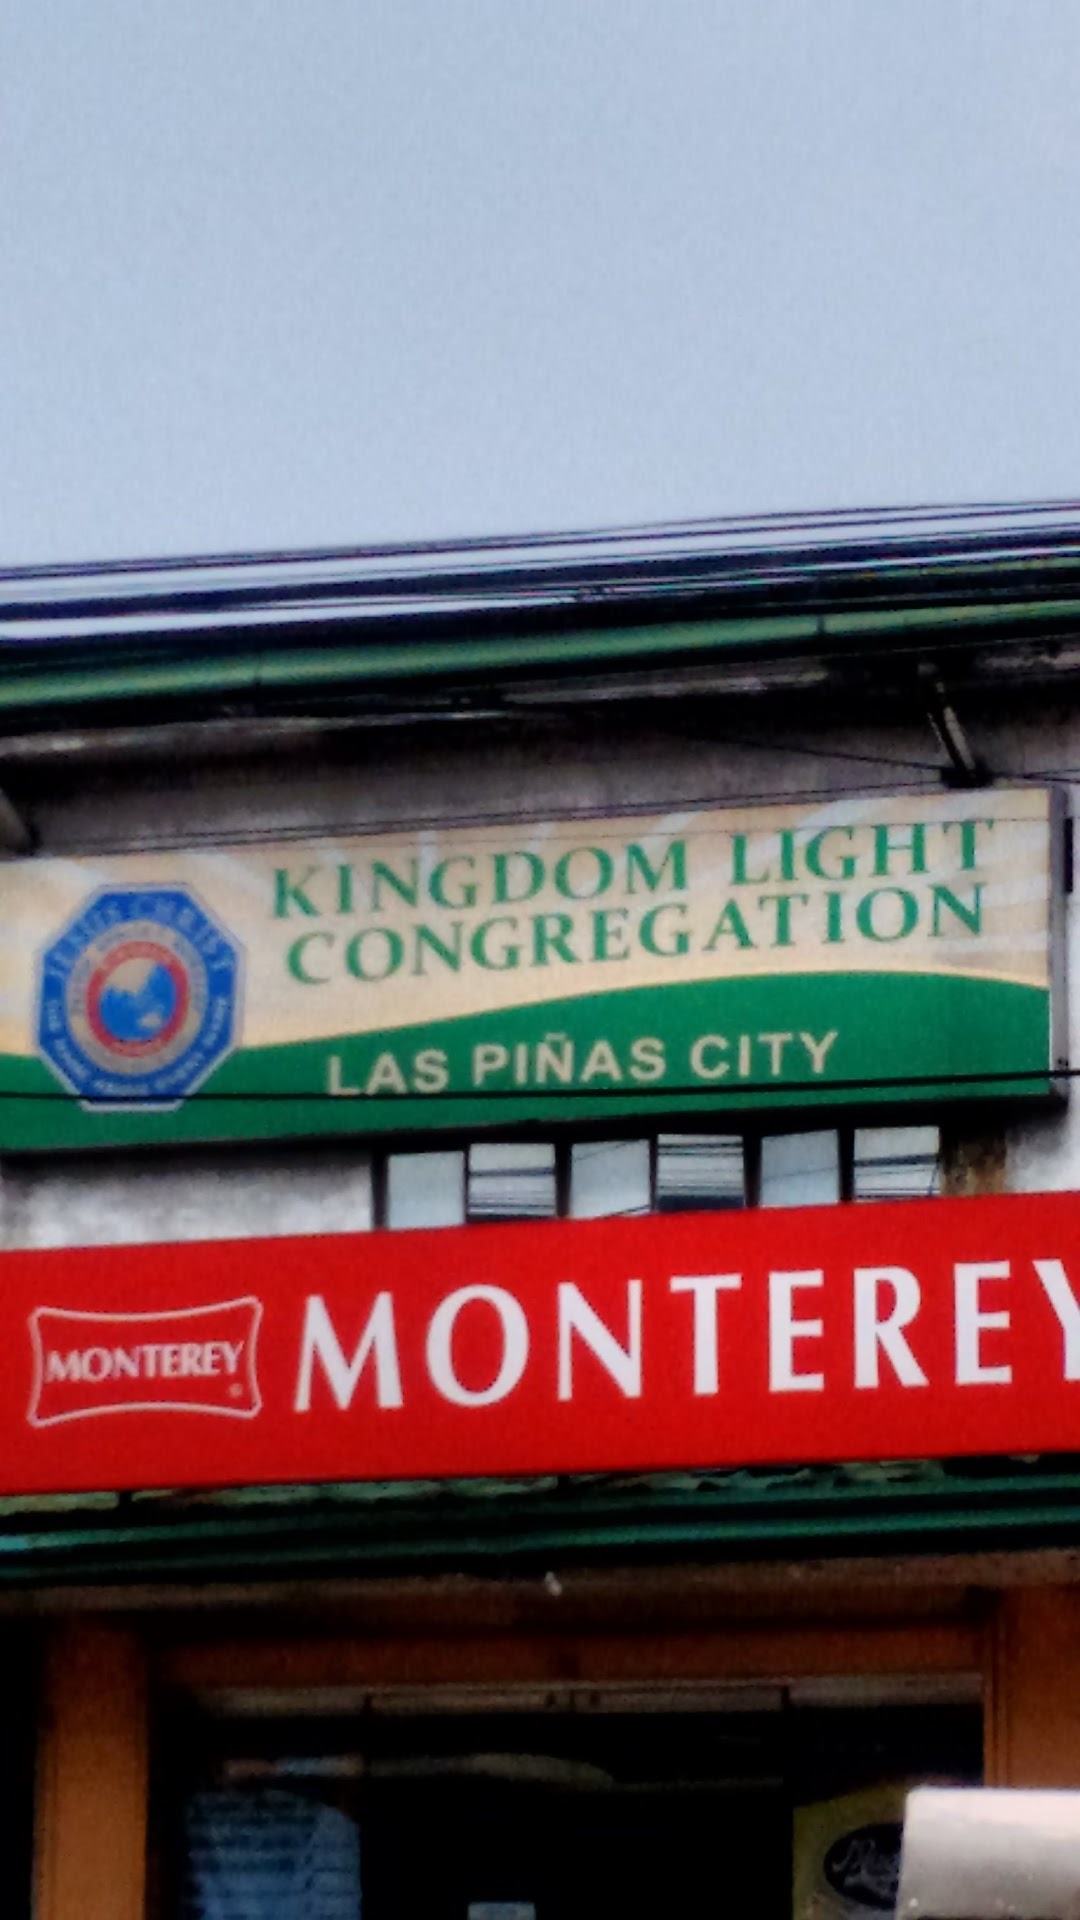 Kingdom Light Congregation